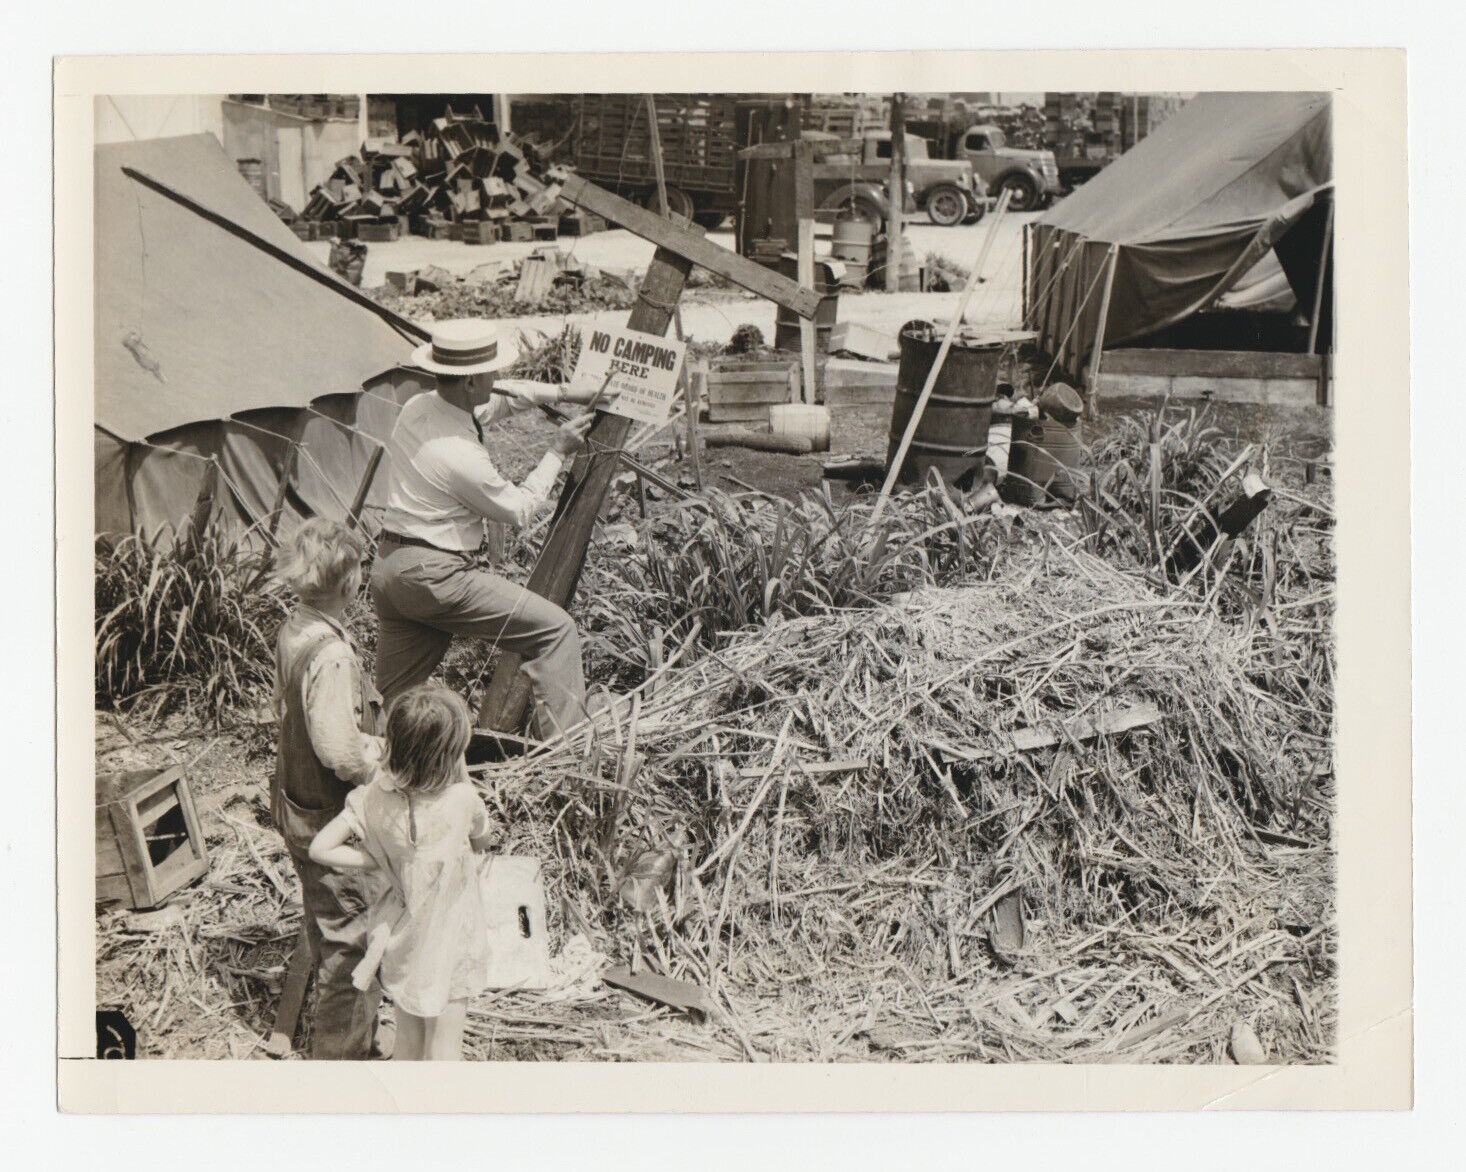 1939 Press Photo Depression Migrant Farm Workers Tent City Belle Glade Florida